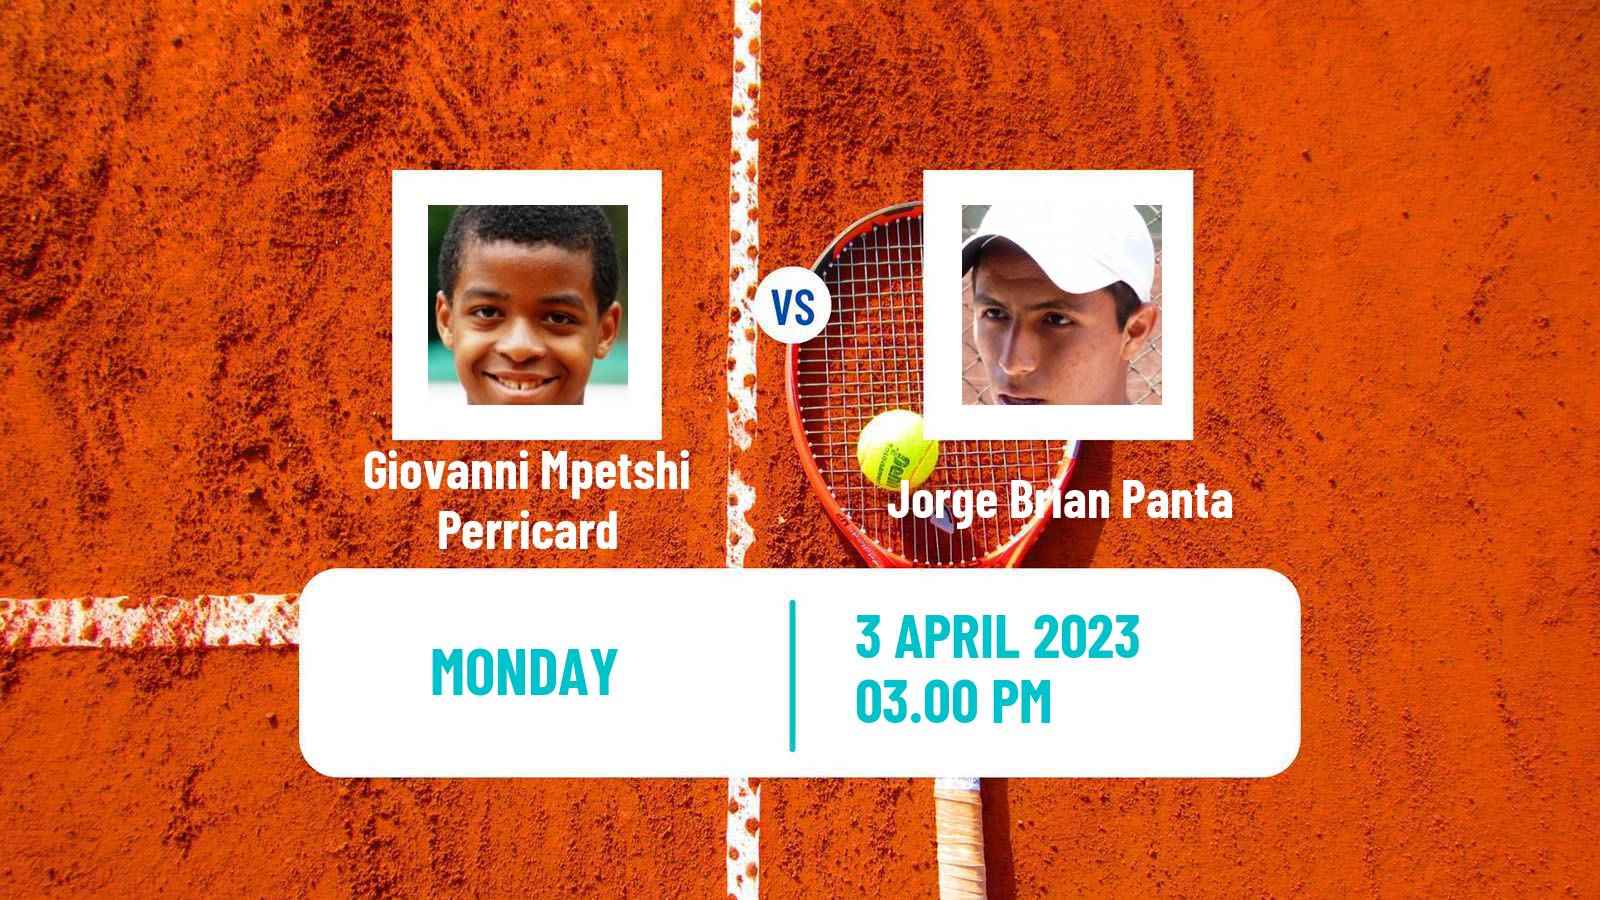 Tennis ATP Challenger Giovanni Mpetshi Perricard - Jorge Brian Panta